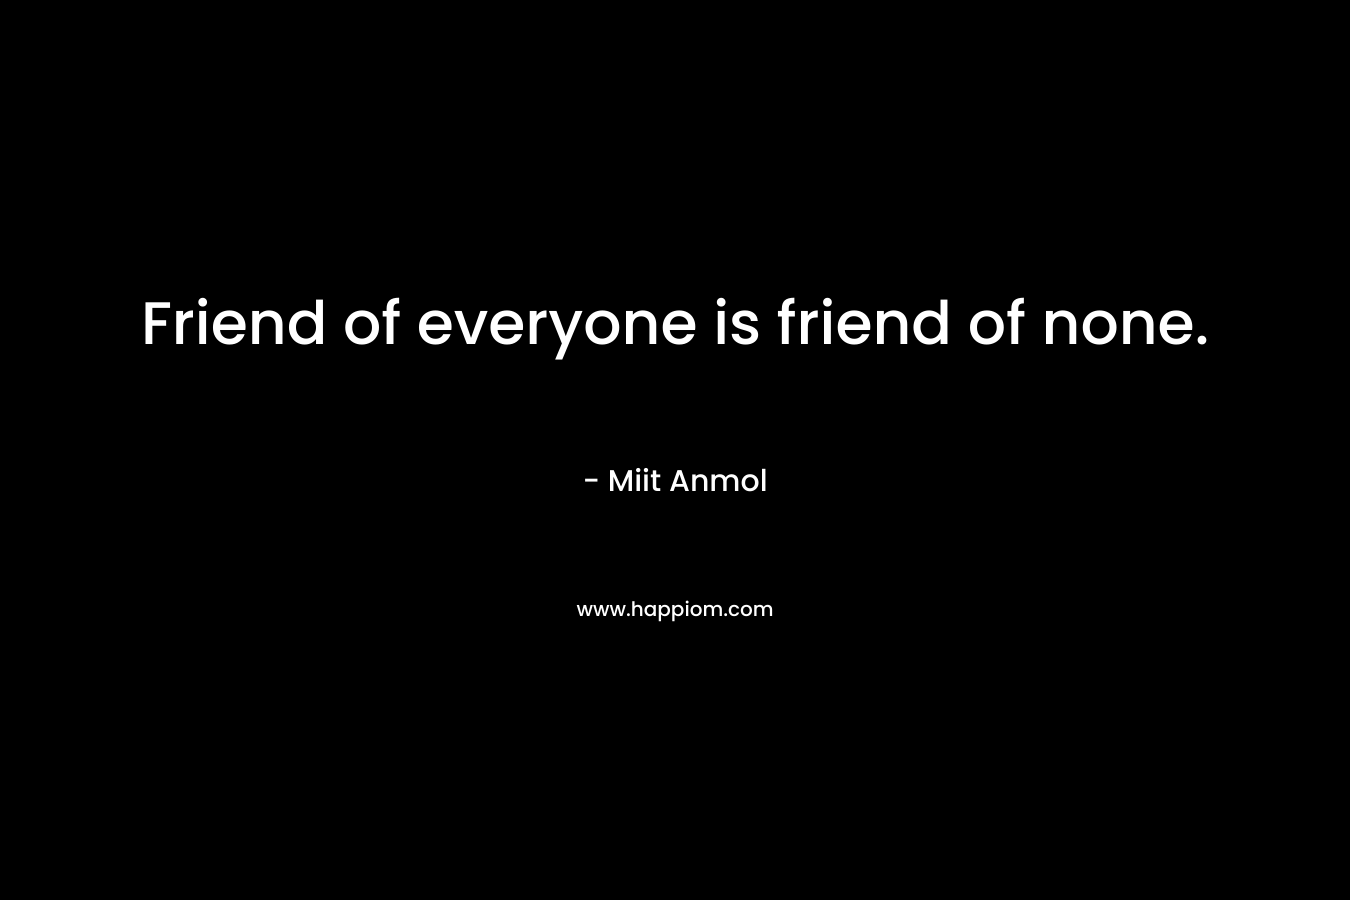 Friend of everyone is friend of none. – Miit Anmol